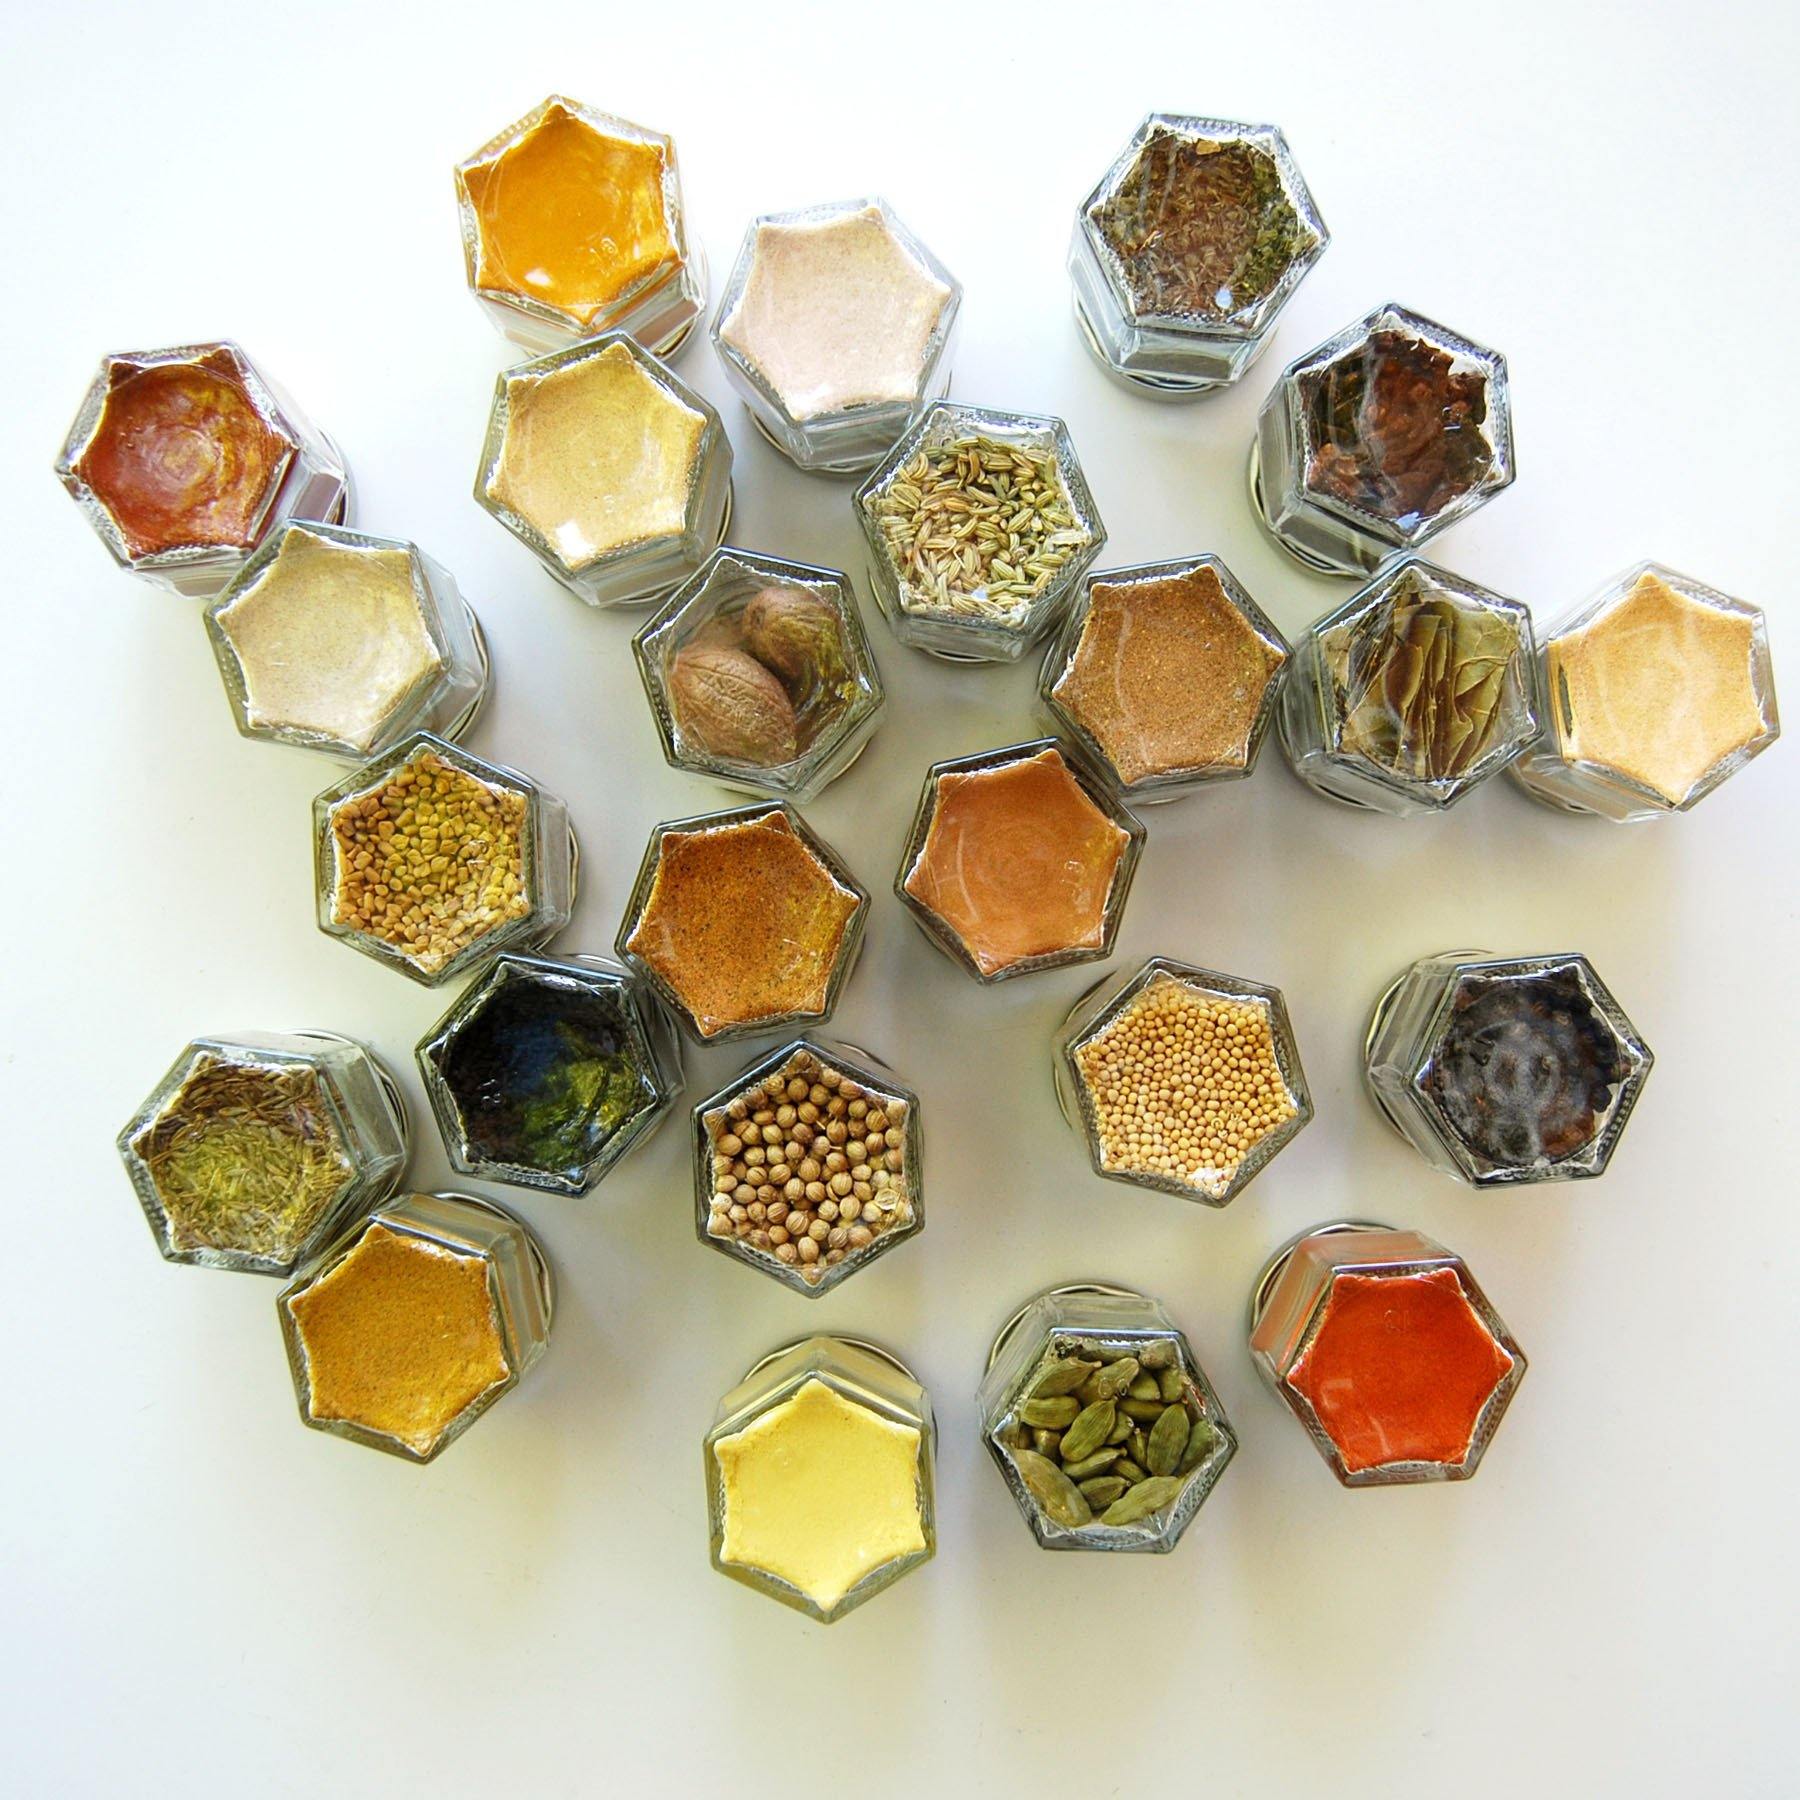 Gneiss Spice Empty Jars Starter Bundle